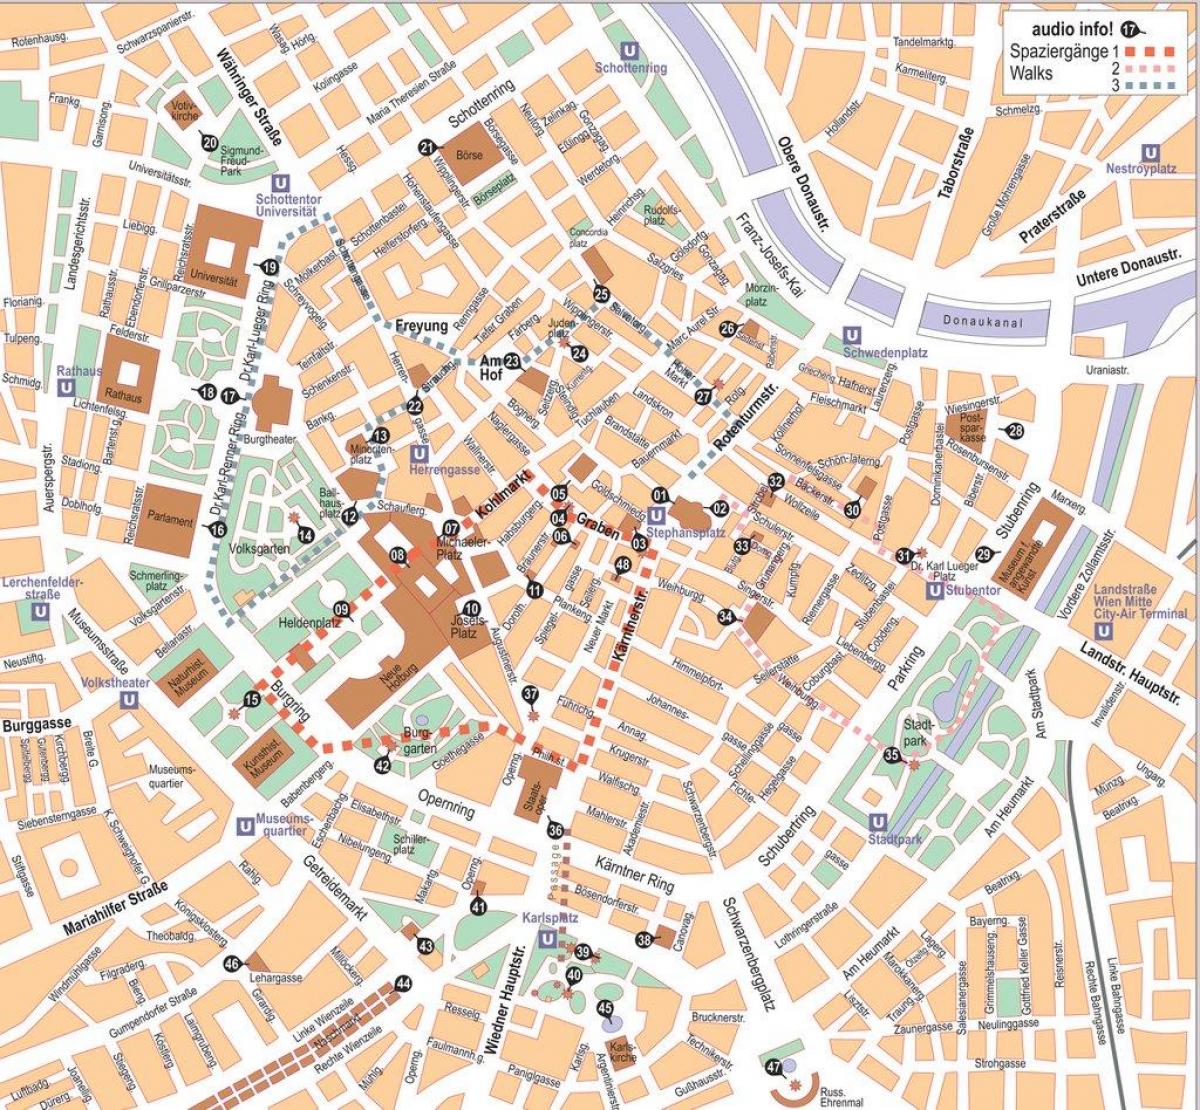 Wiedeń Austria miasto-centrum na mapie